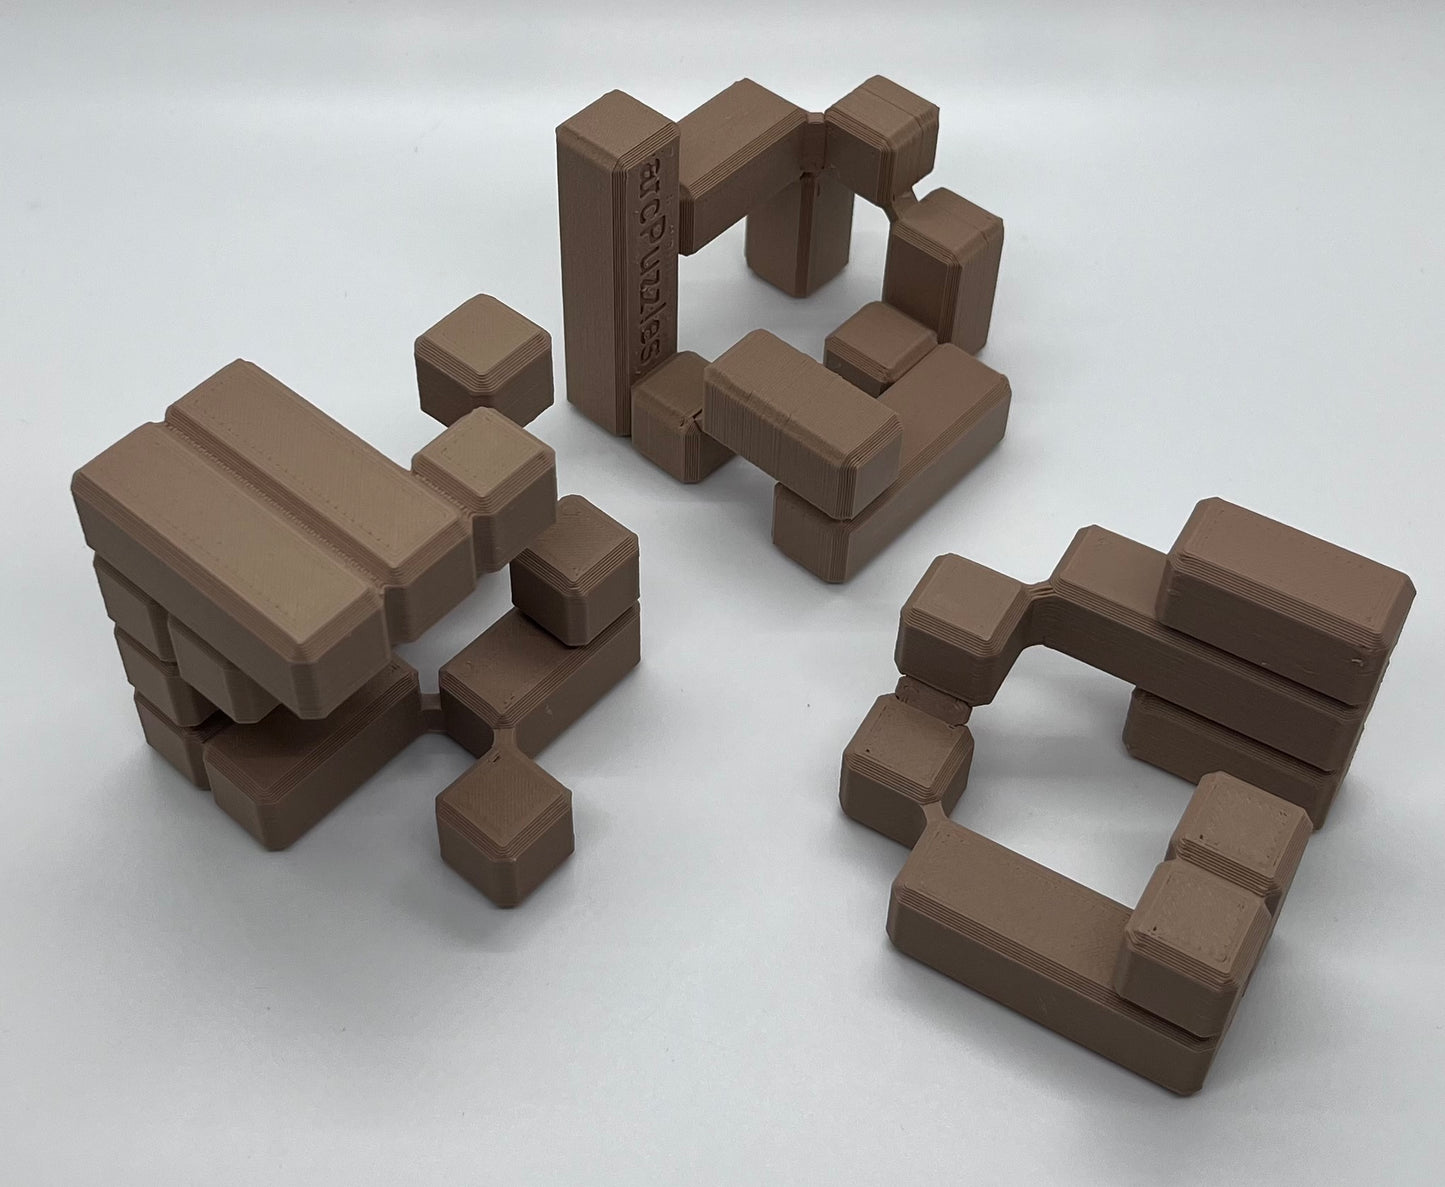 ECTIC - 3D Printed Wood Filament Puzzle